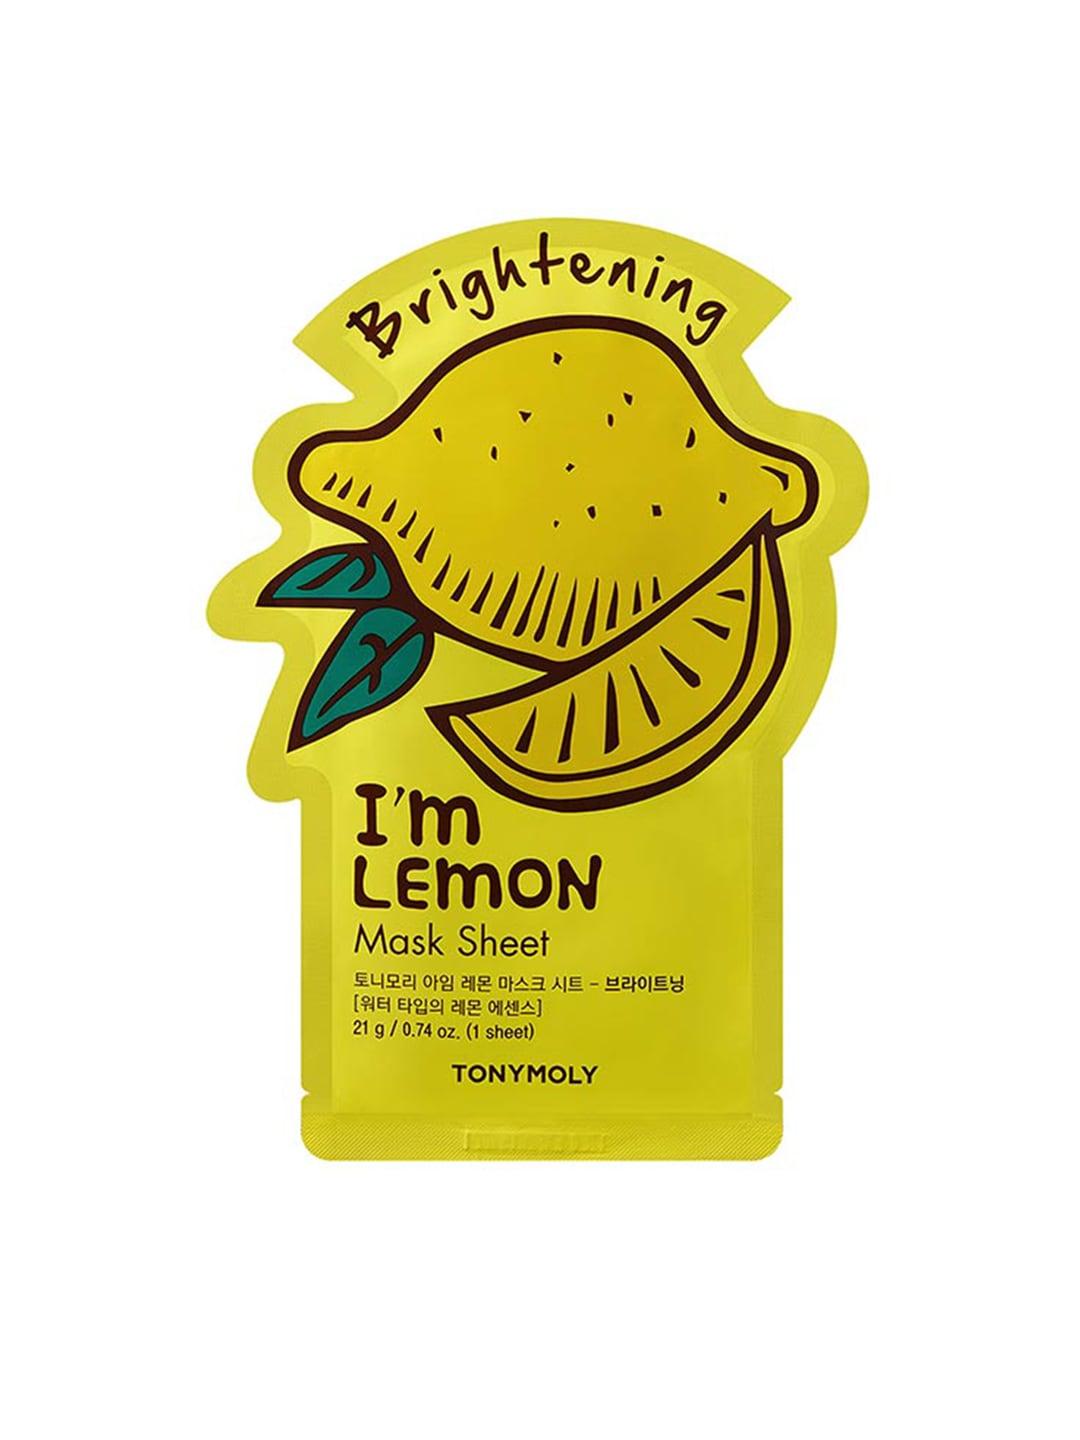 TONYMOLY I'M Lemon Mask Sheet for Skin Brightening - 21g